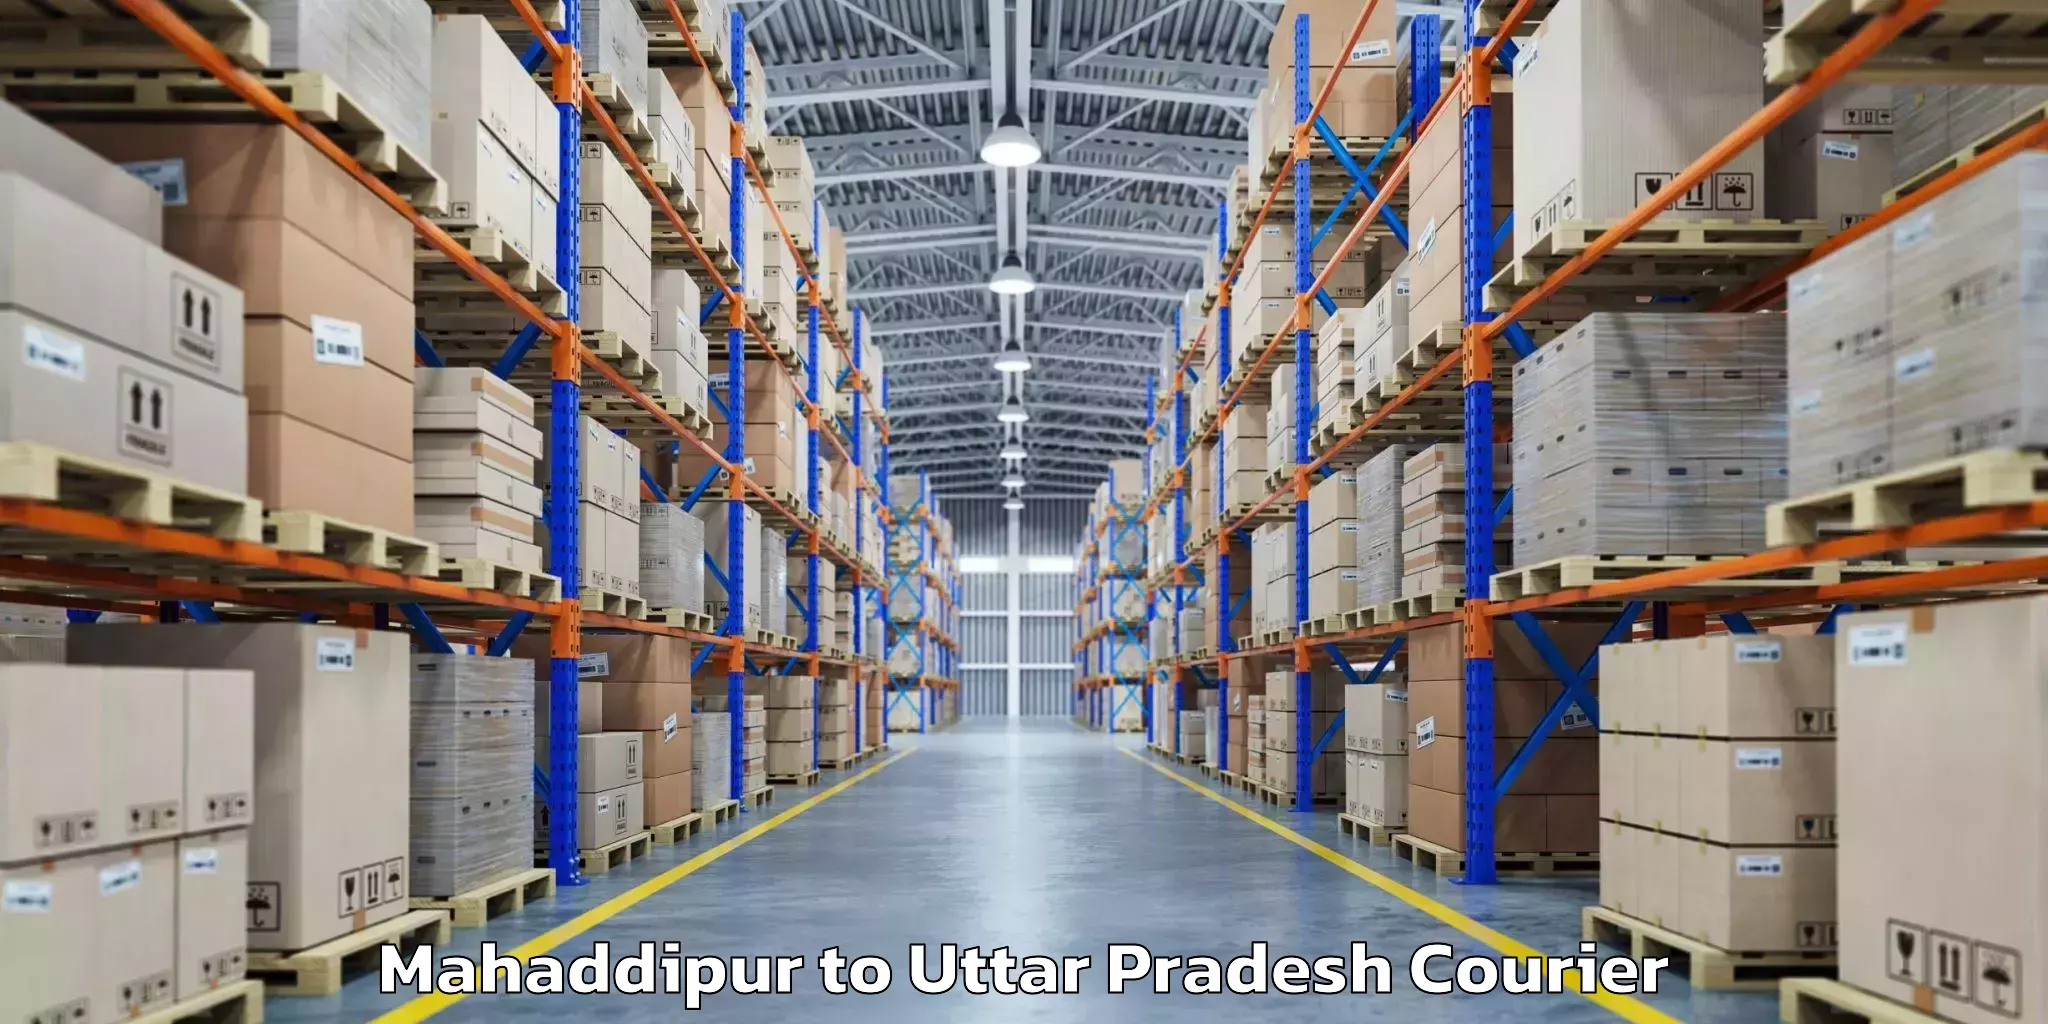 Multi-destination luggage transport in Mahaddipur to Pratapgarh